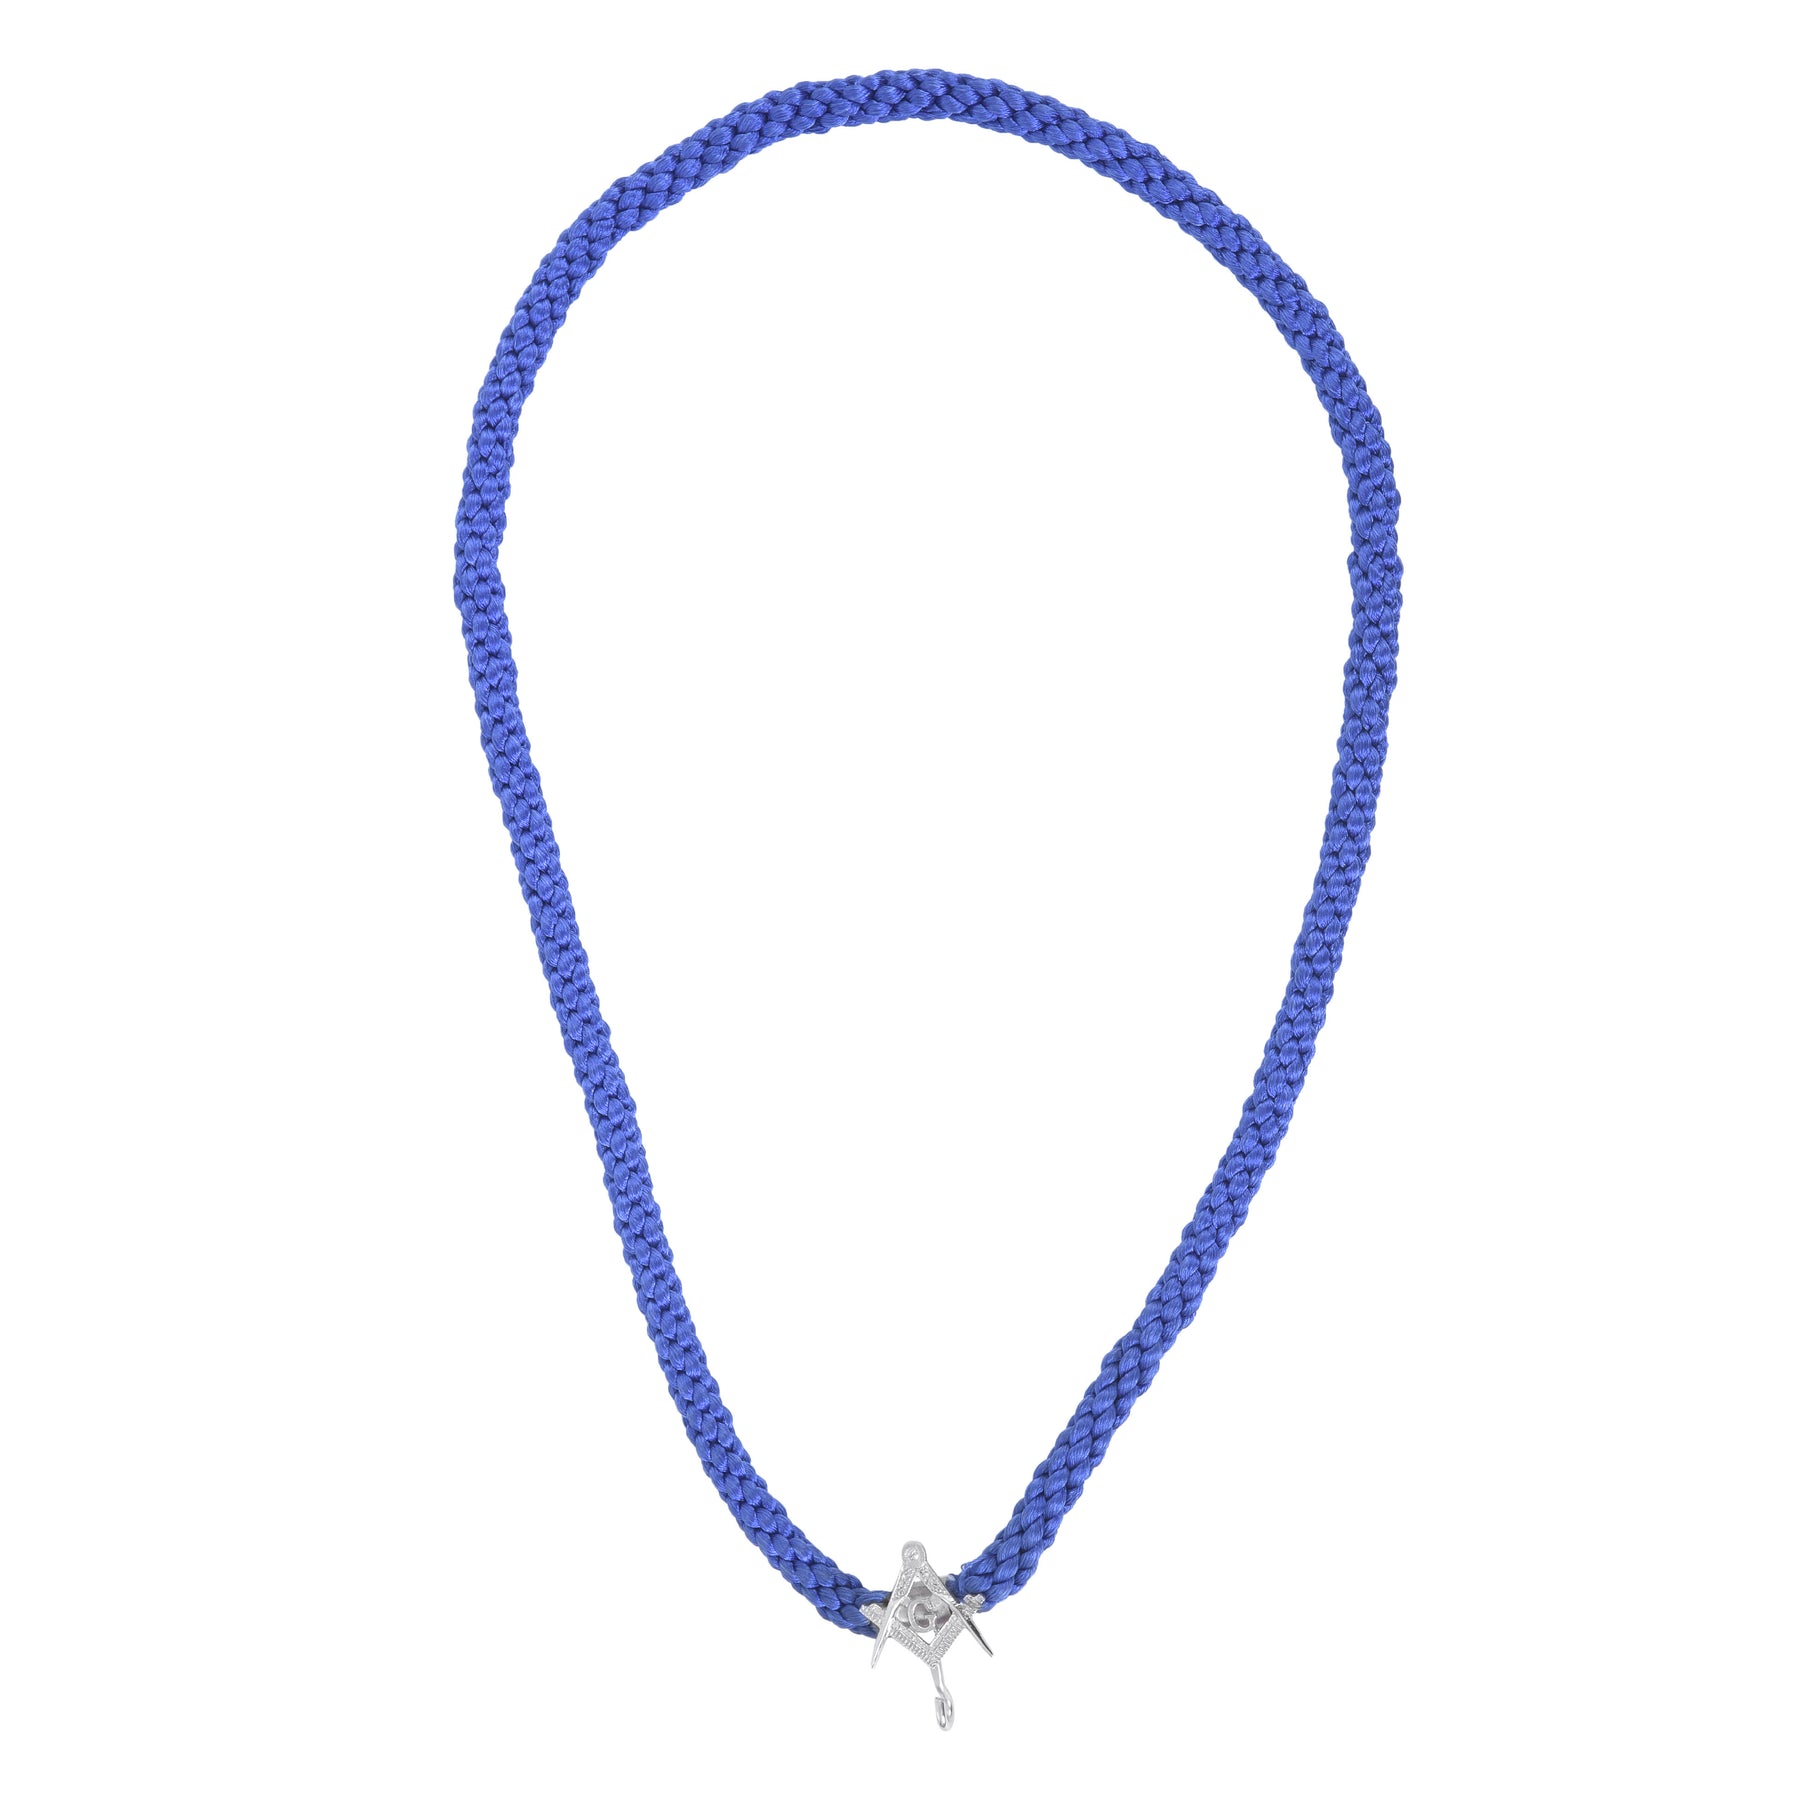 Master Mason Blue Lodge Necklace - Blue & Silver - Bricks Masons